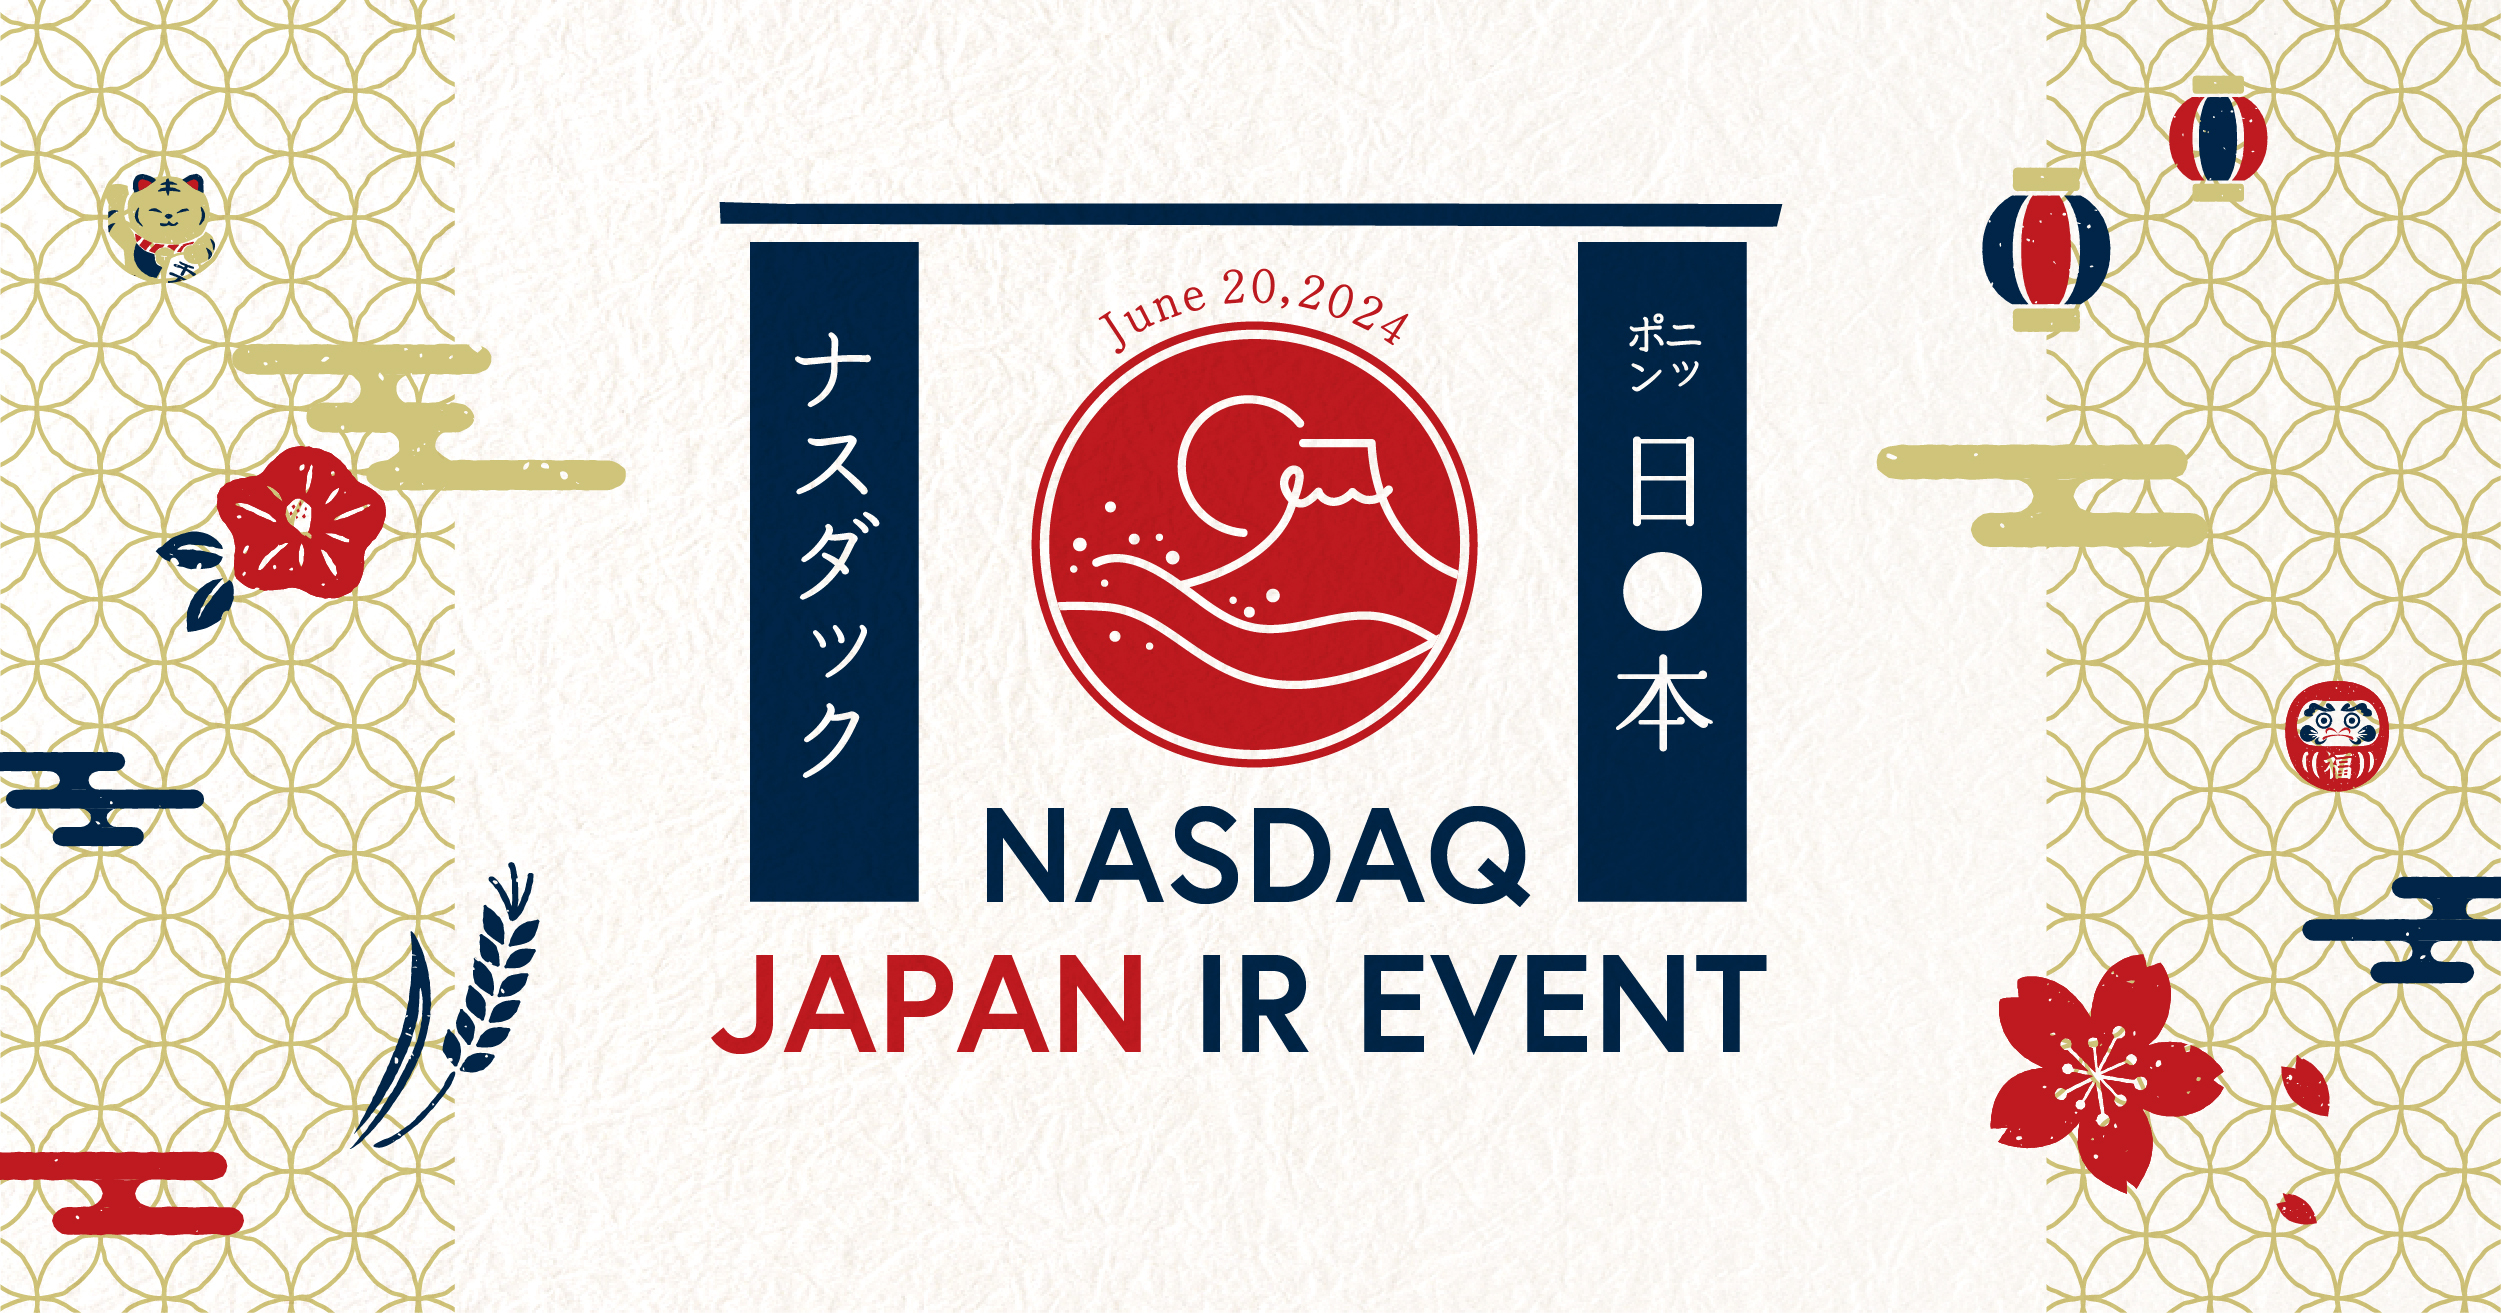 Japan IR Event at Nadaq logo